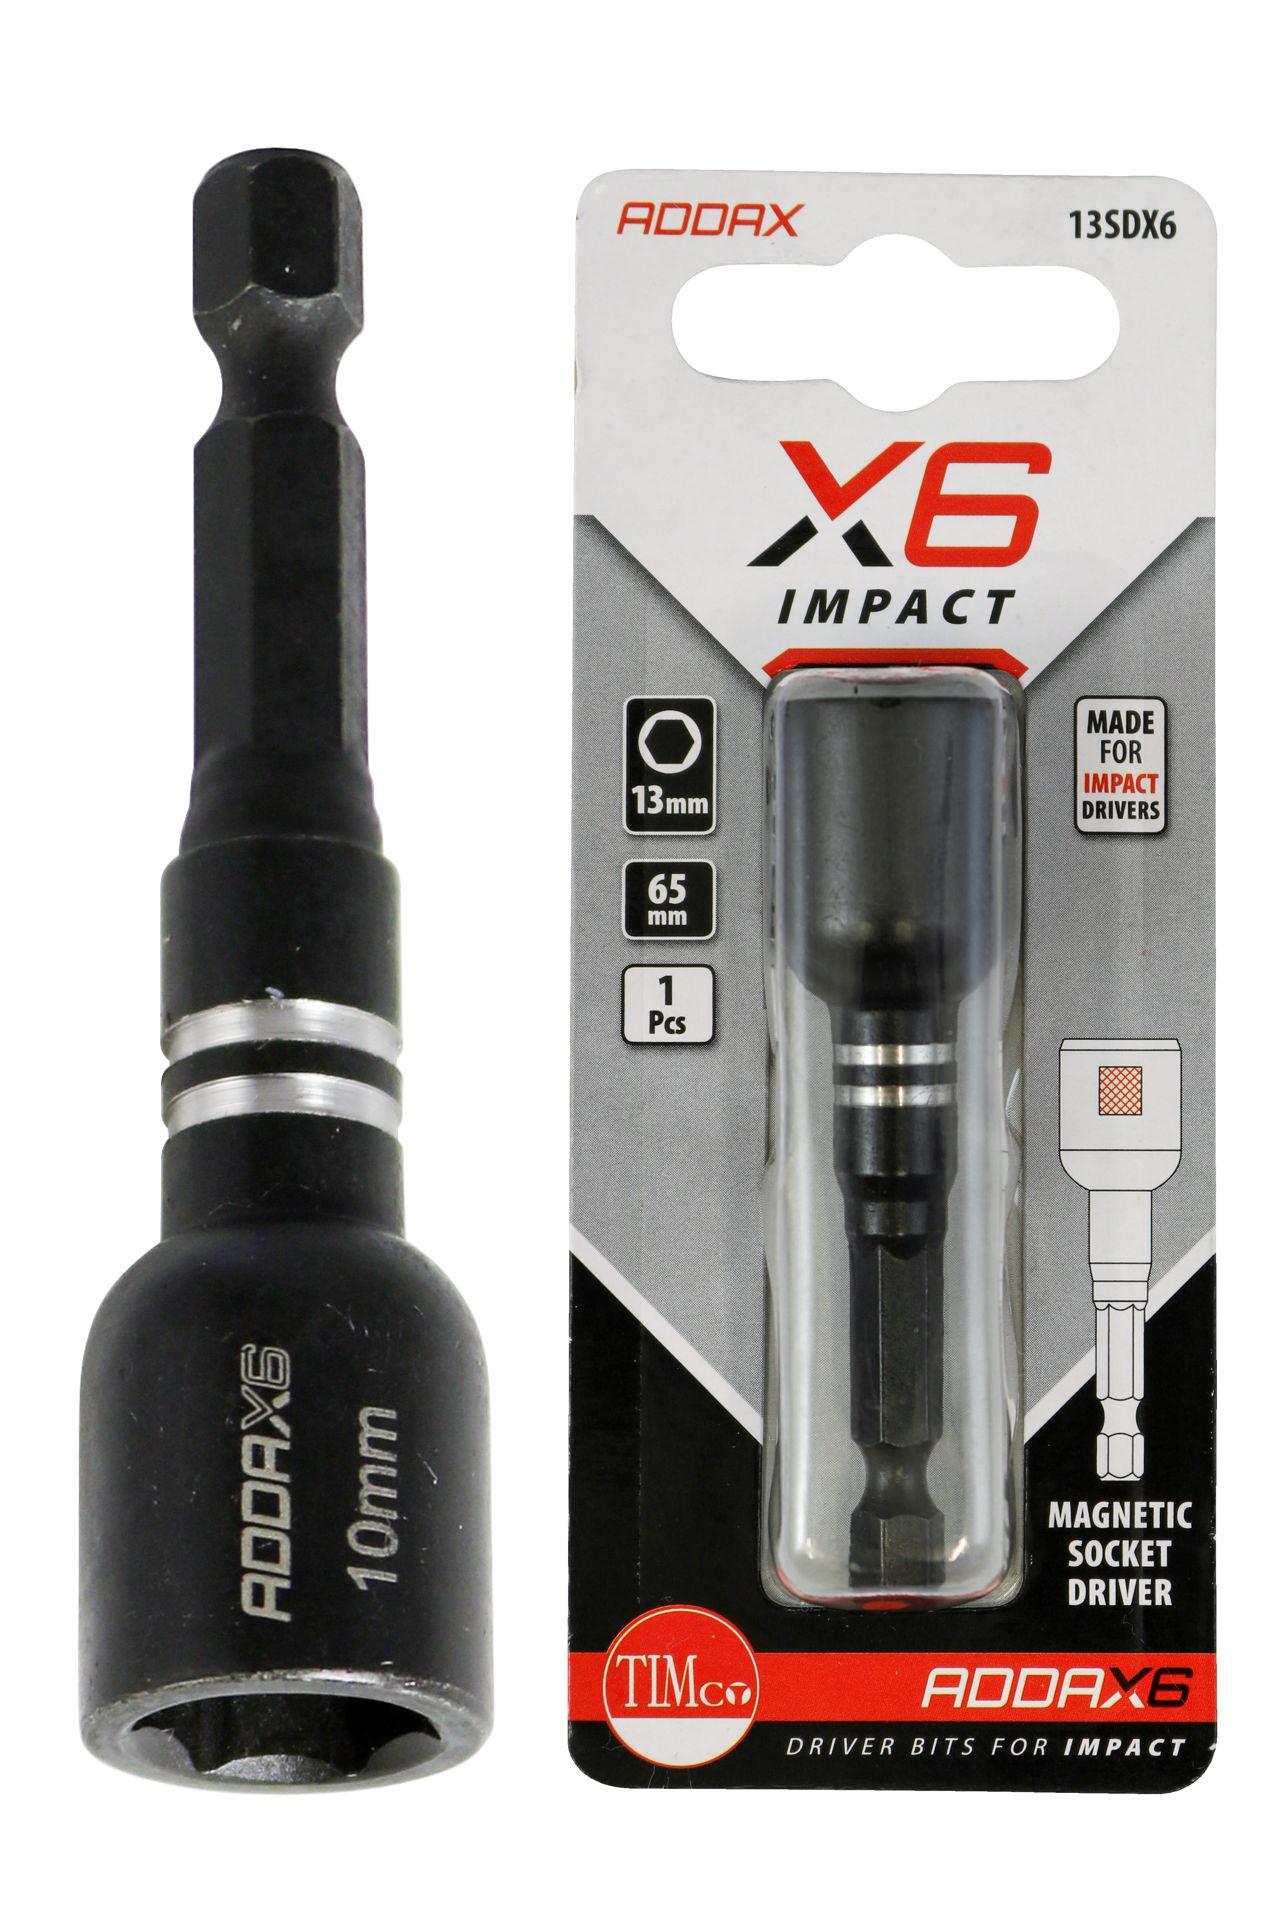 Addax X6 Impact Magnetic Socket Driver